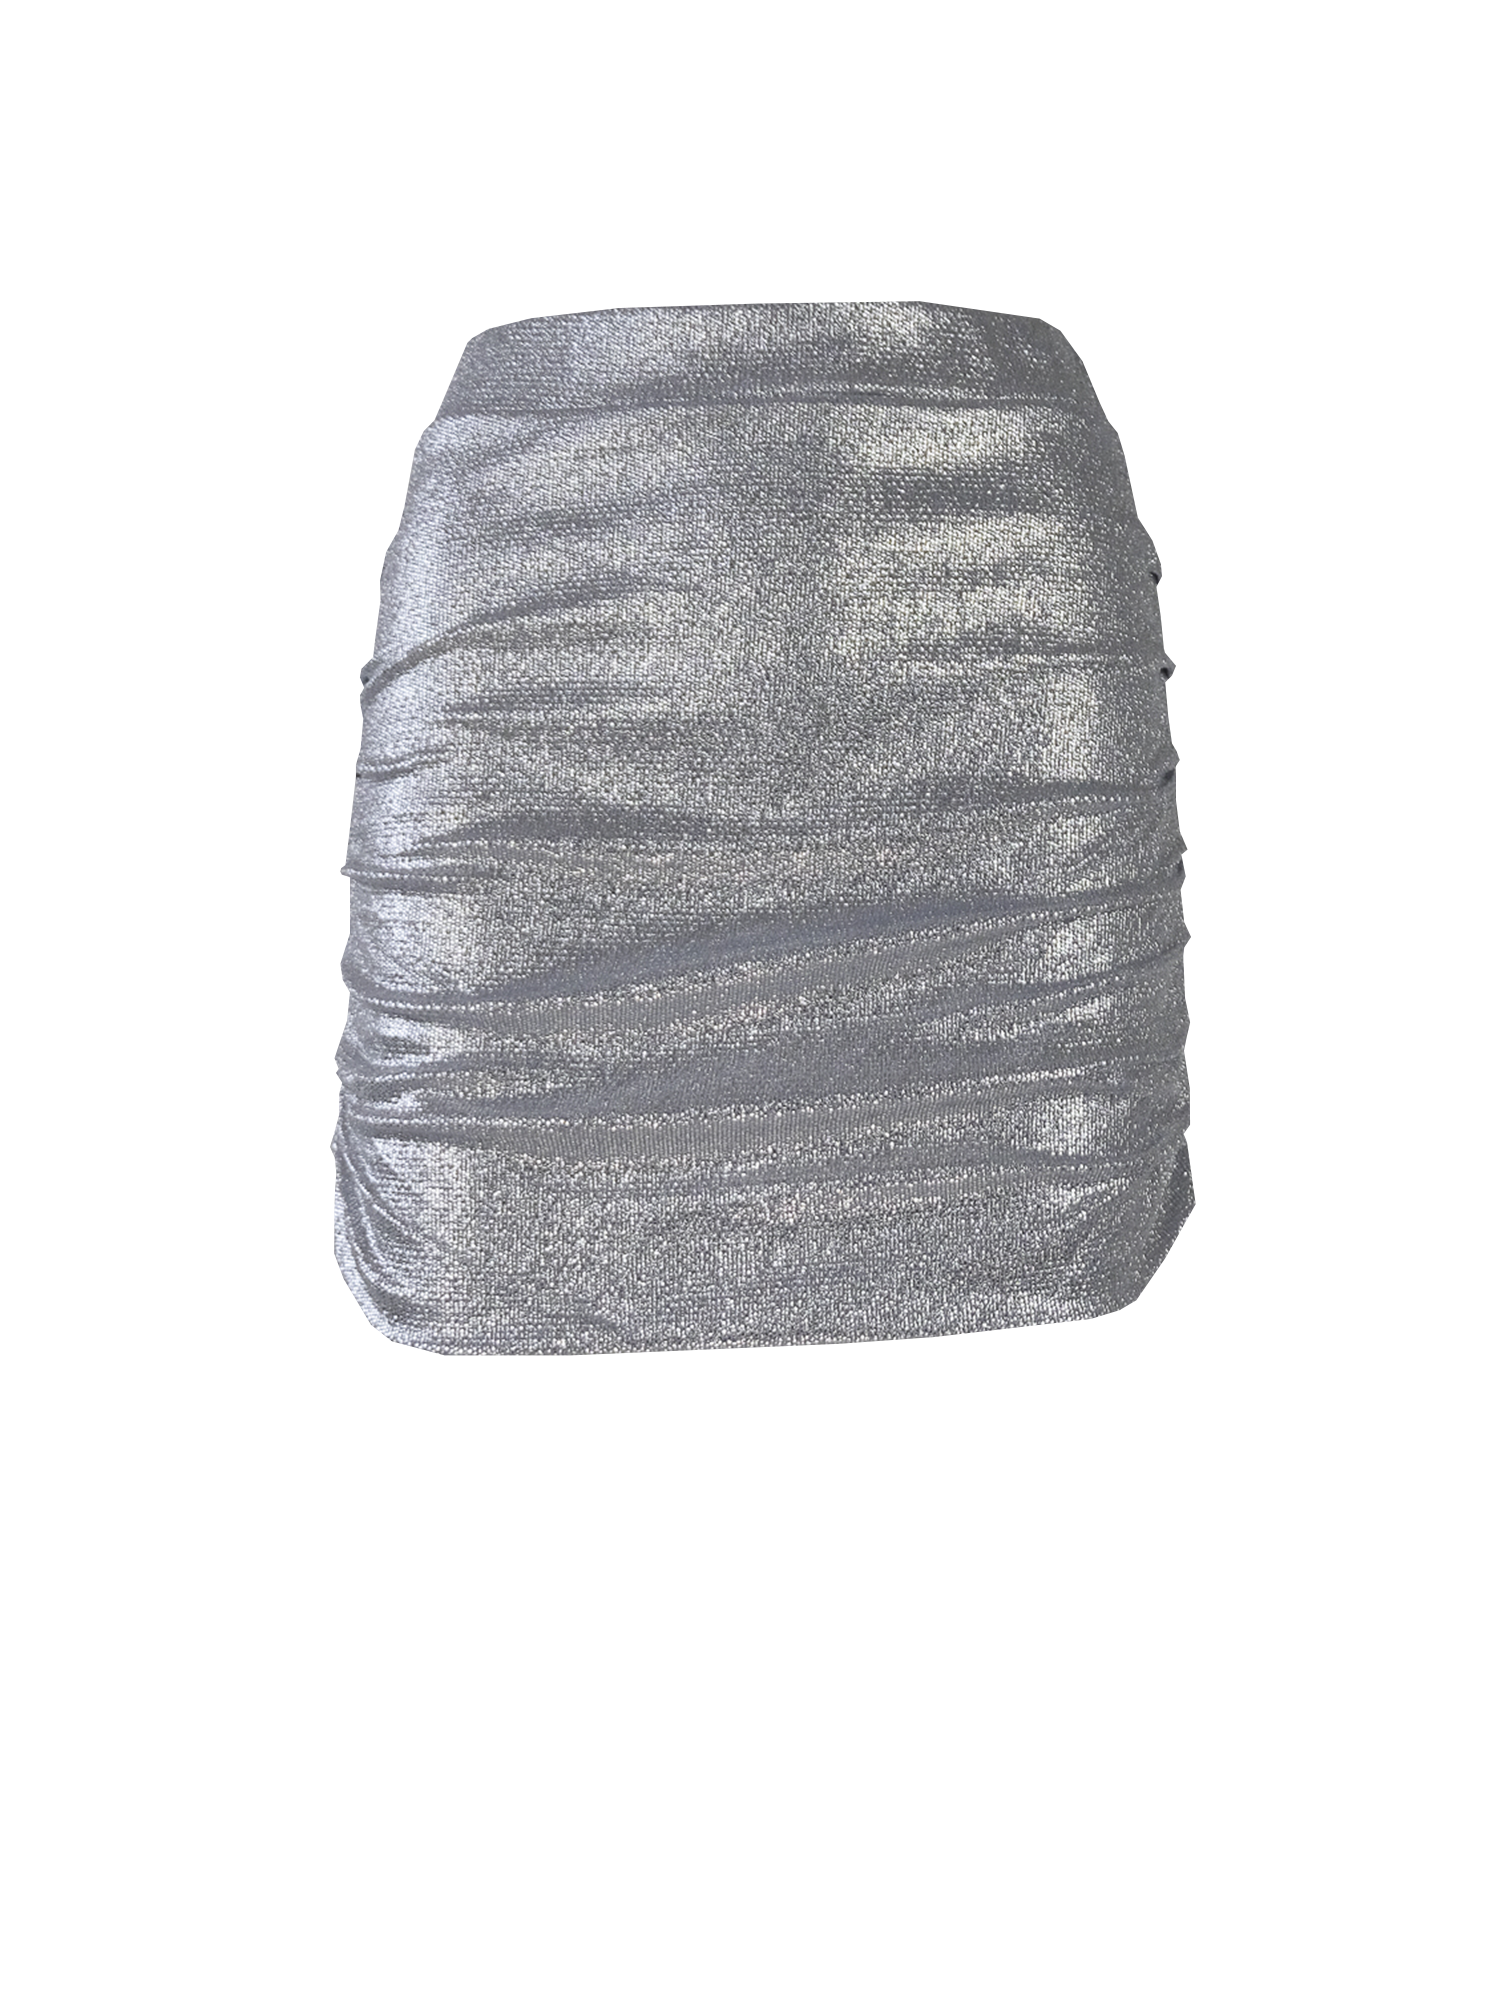 NINA - drap skirt in silver lurex